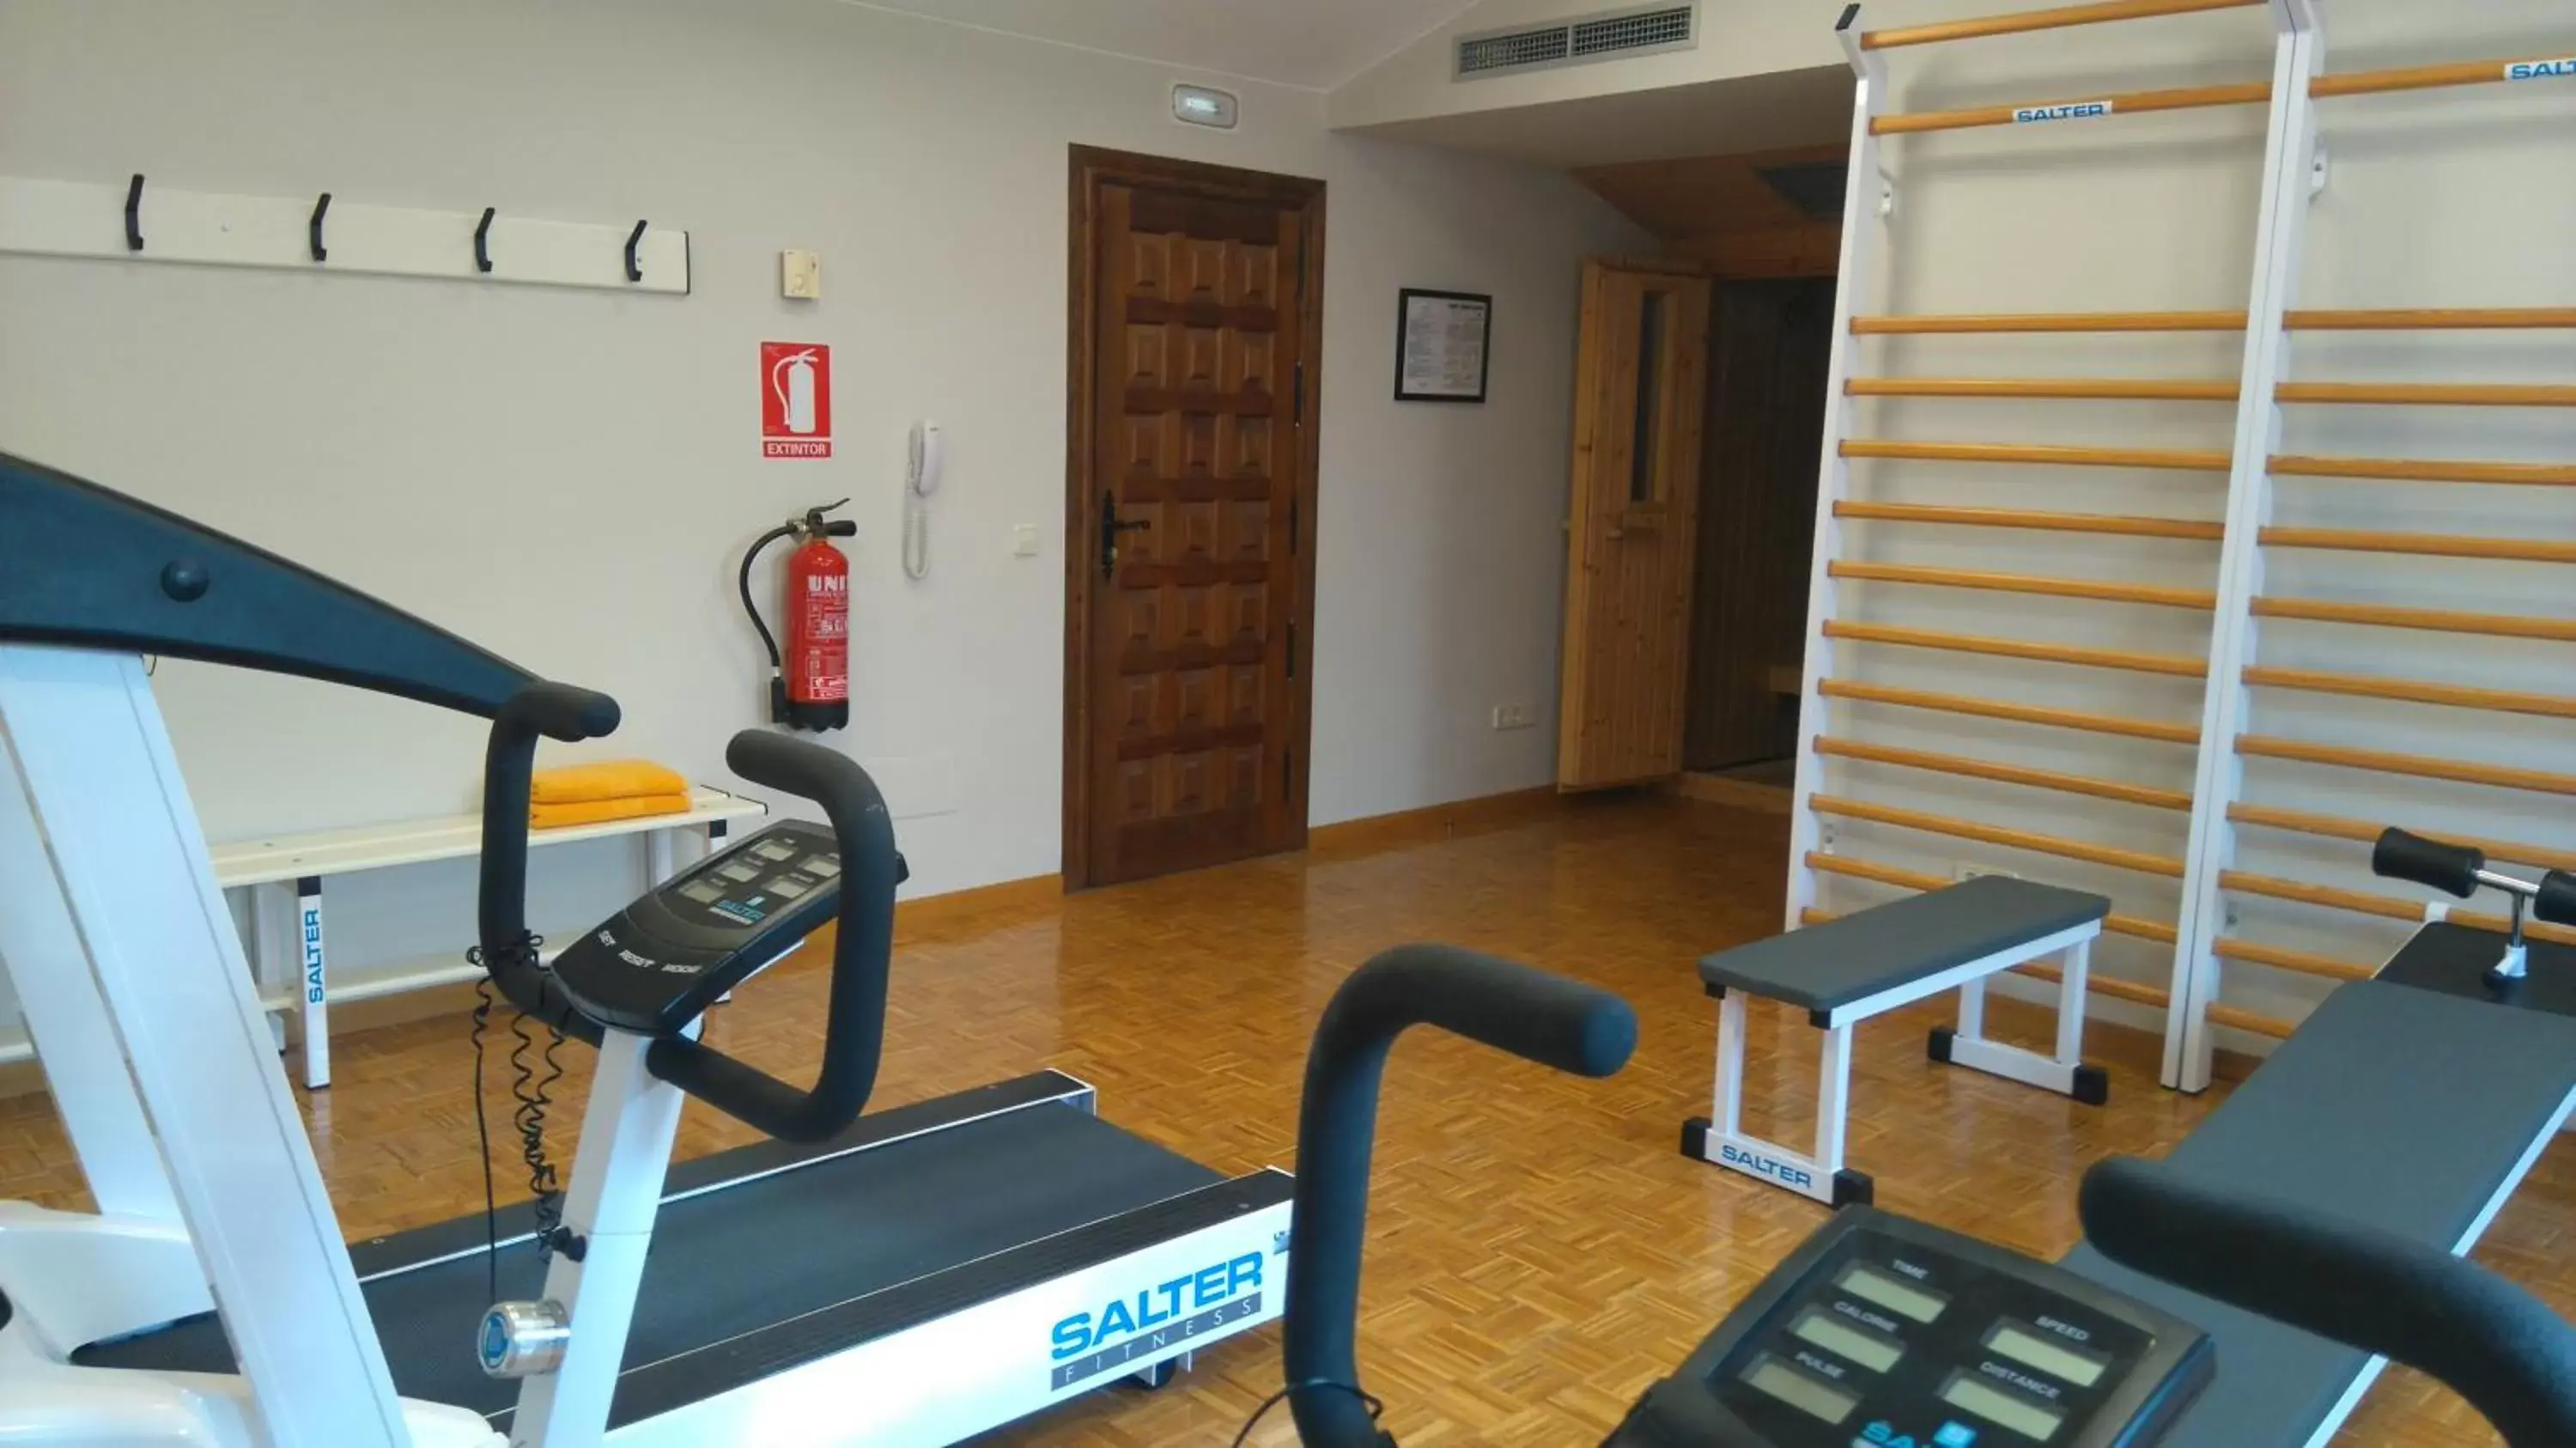 Fitness centre/facilities, Fitness Center/Facilities in Parador de Alcañiz